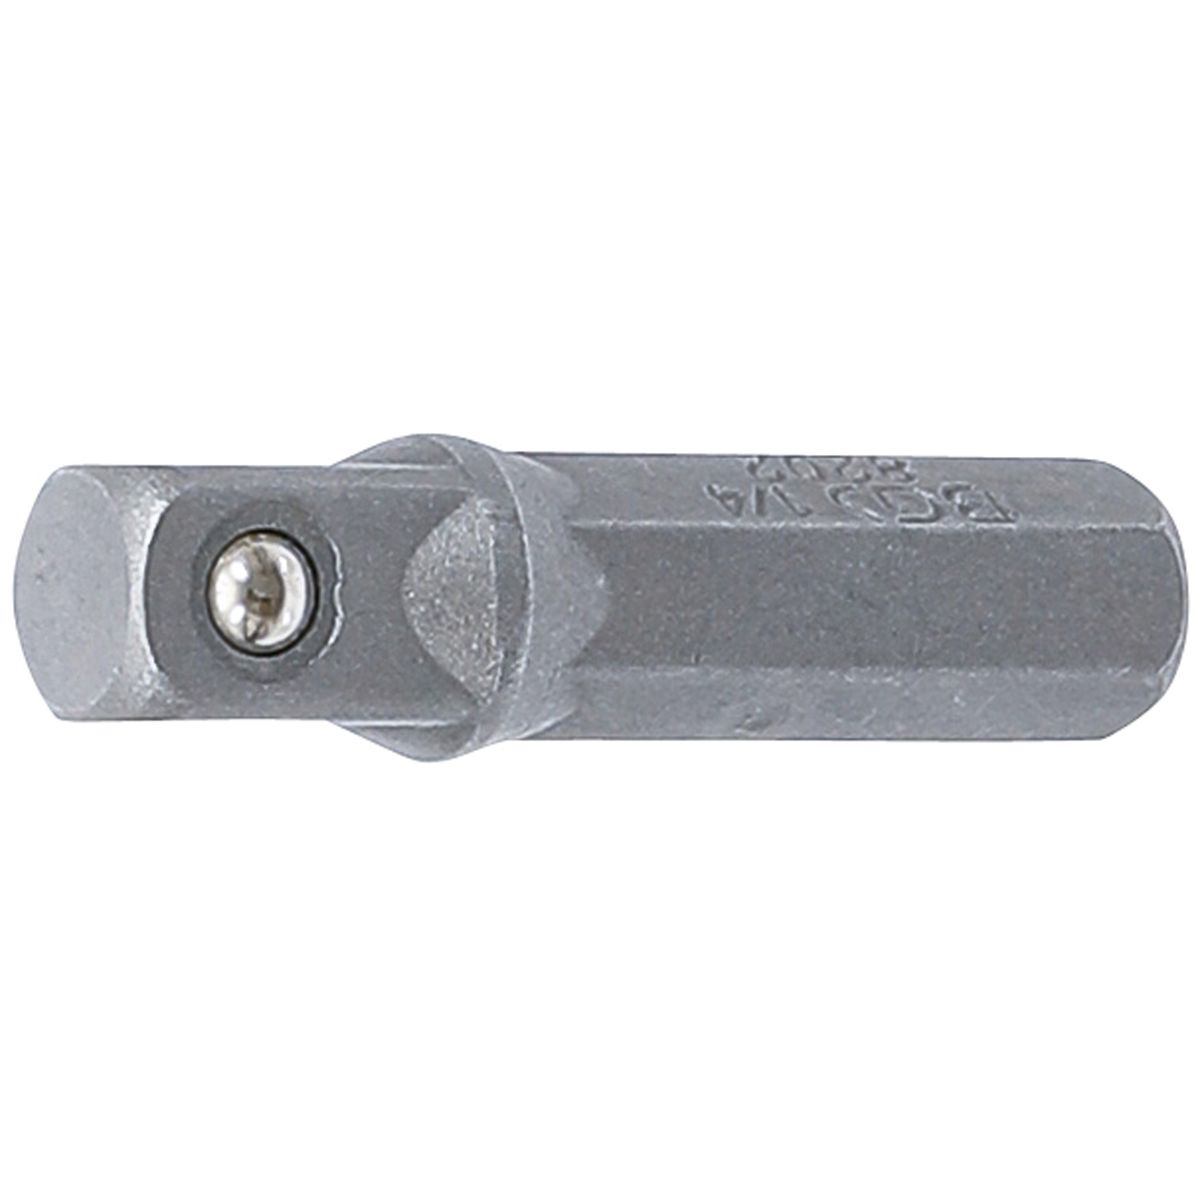 Bit-Knarren-Adapter | Außensechskant 6,3 mm (1/4") - Außenvierkant 6,3 mm (1/4") | 30 mm